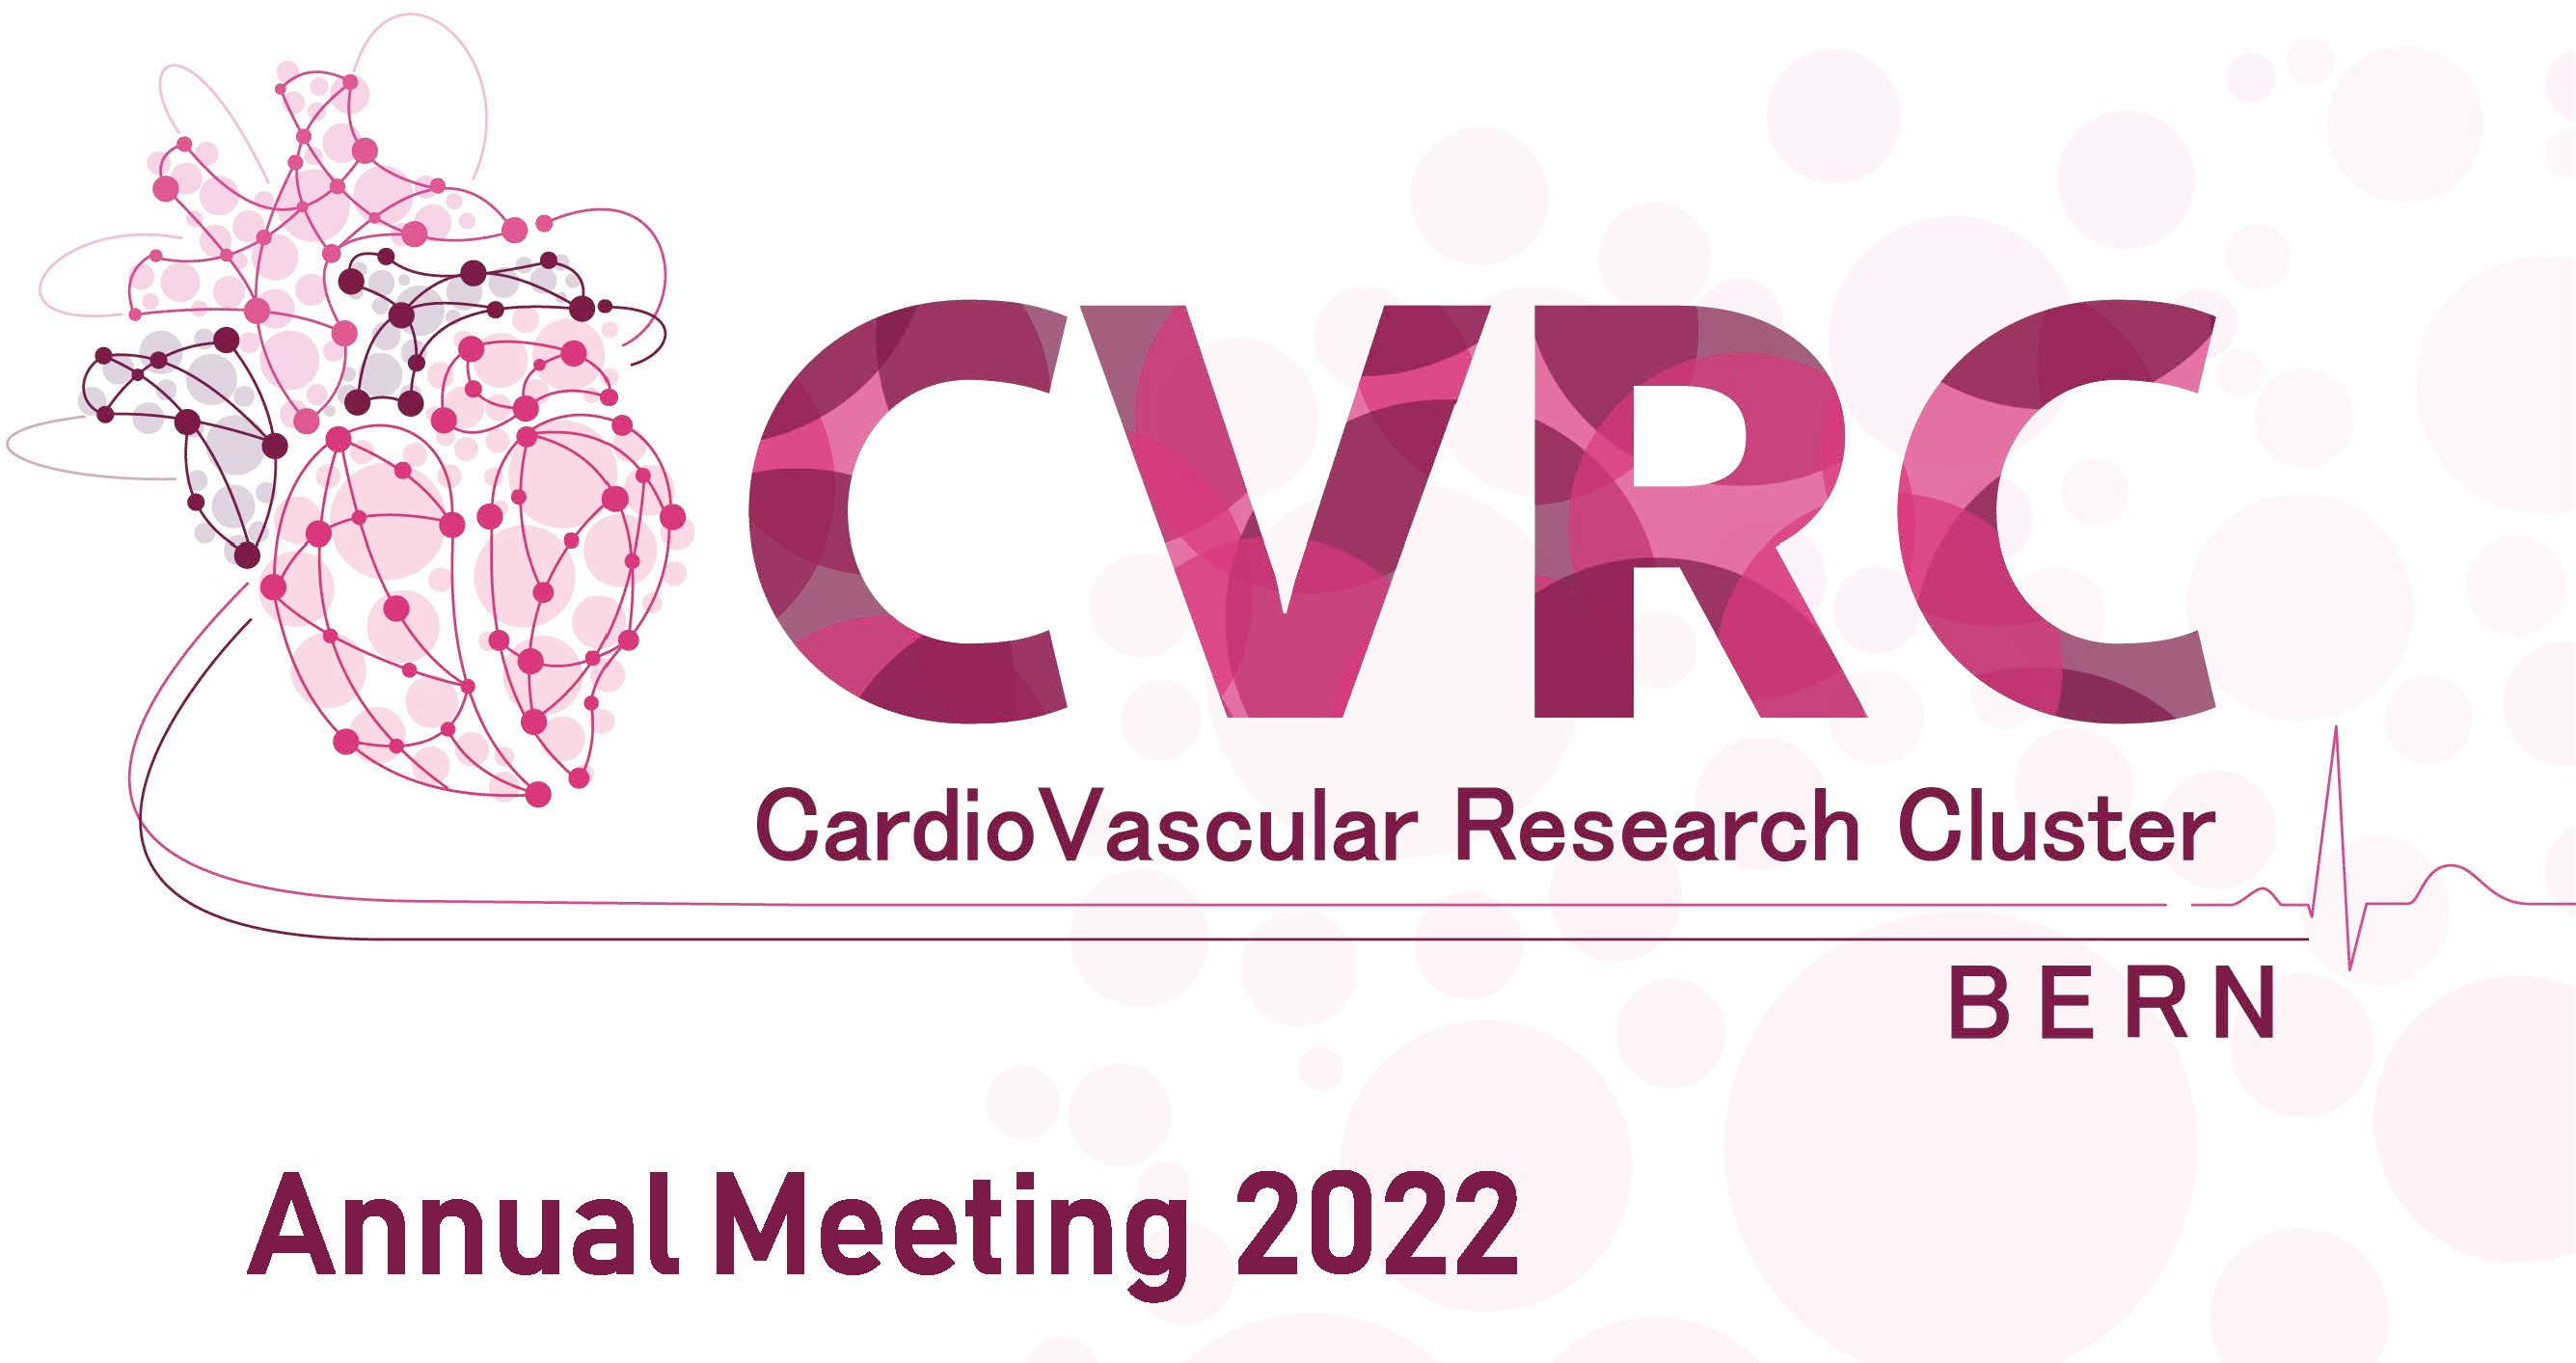 CVRC Annual Meeting logo